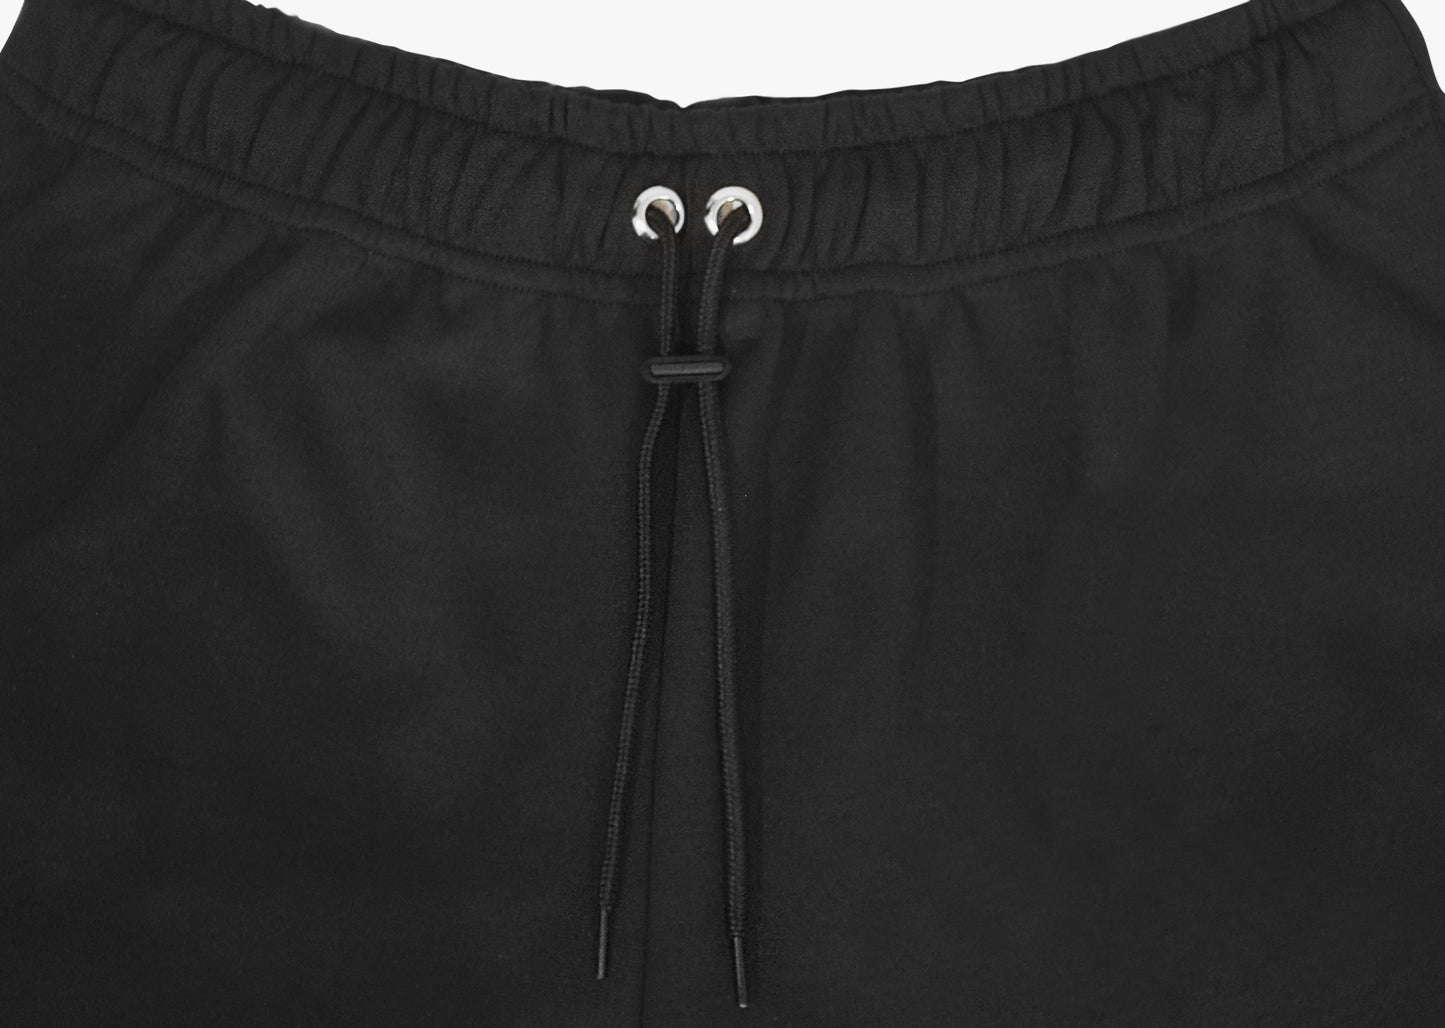 Pantaloneta Perchada Negra Basica